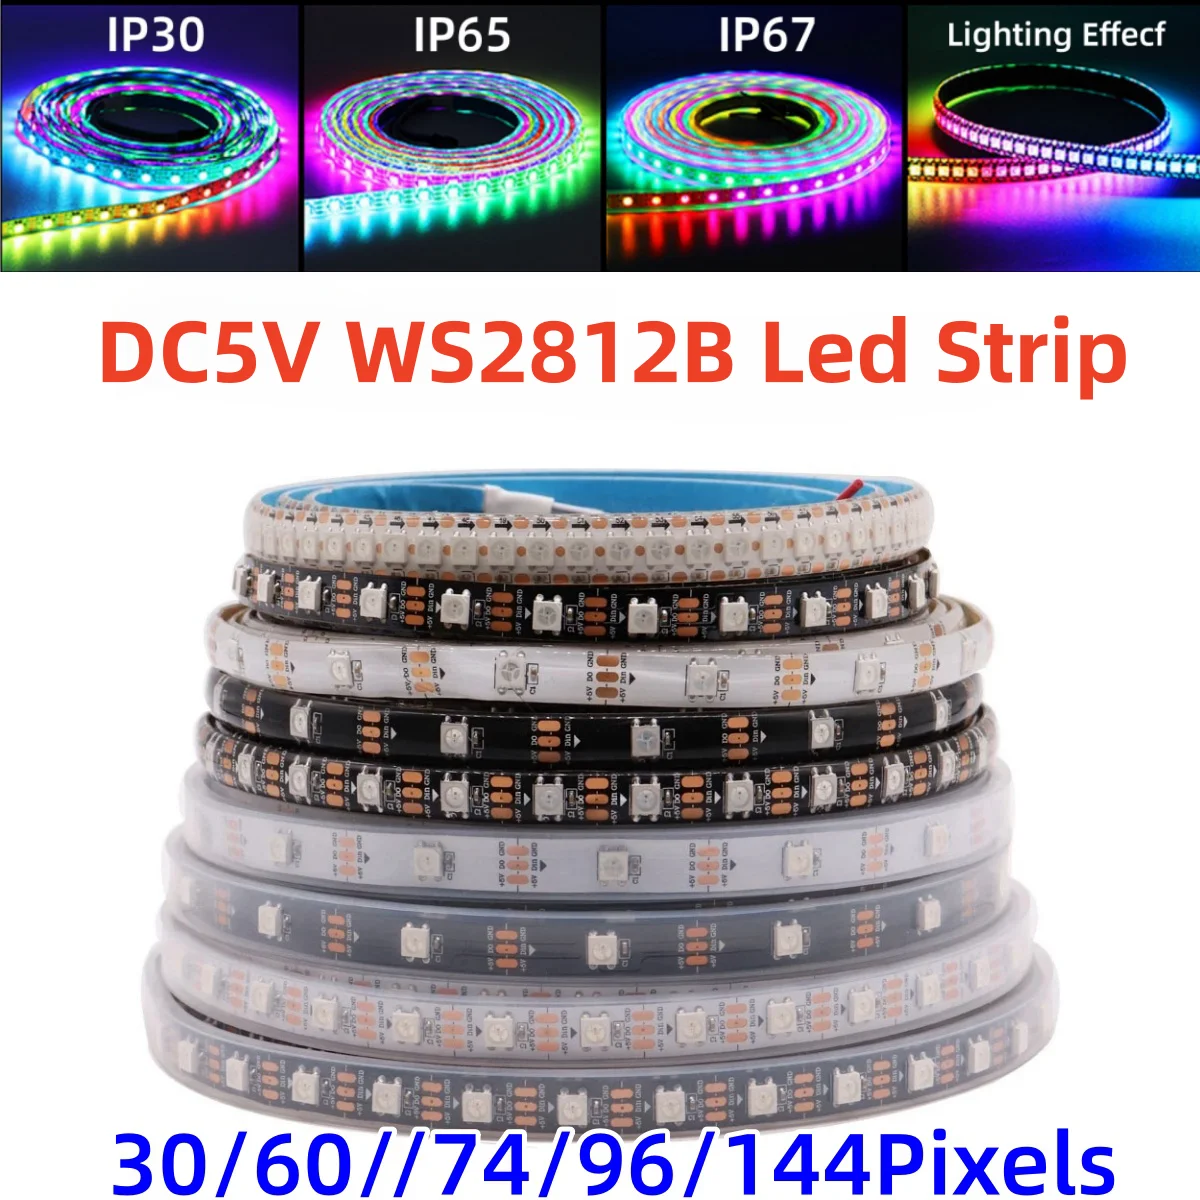 

DC5V WS2812B Led Strip 30/60/74/96/144 Leds Smart RGB Pixel Strip Black/White PCB IP30/65/67 WS2812 IC Led Light 1m/2m/3m/4m/5m